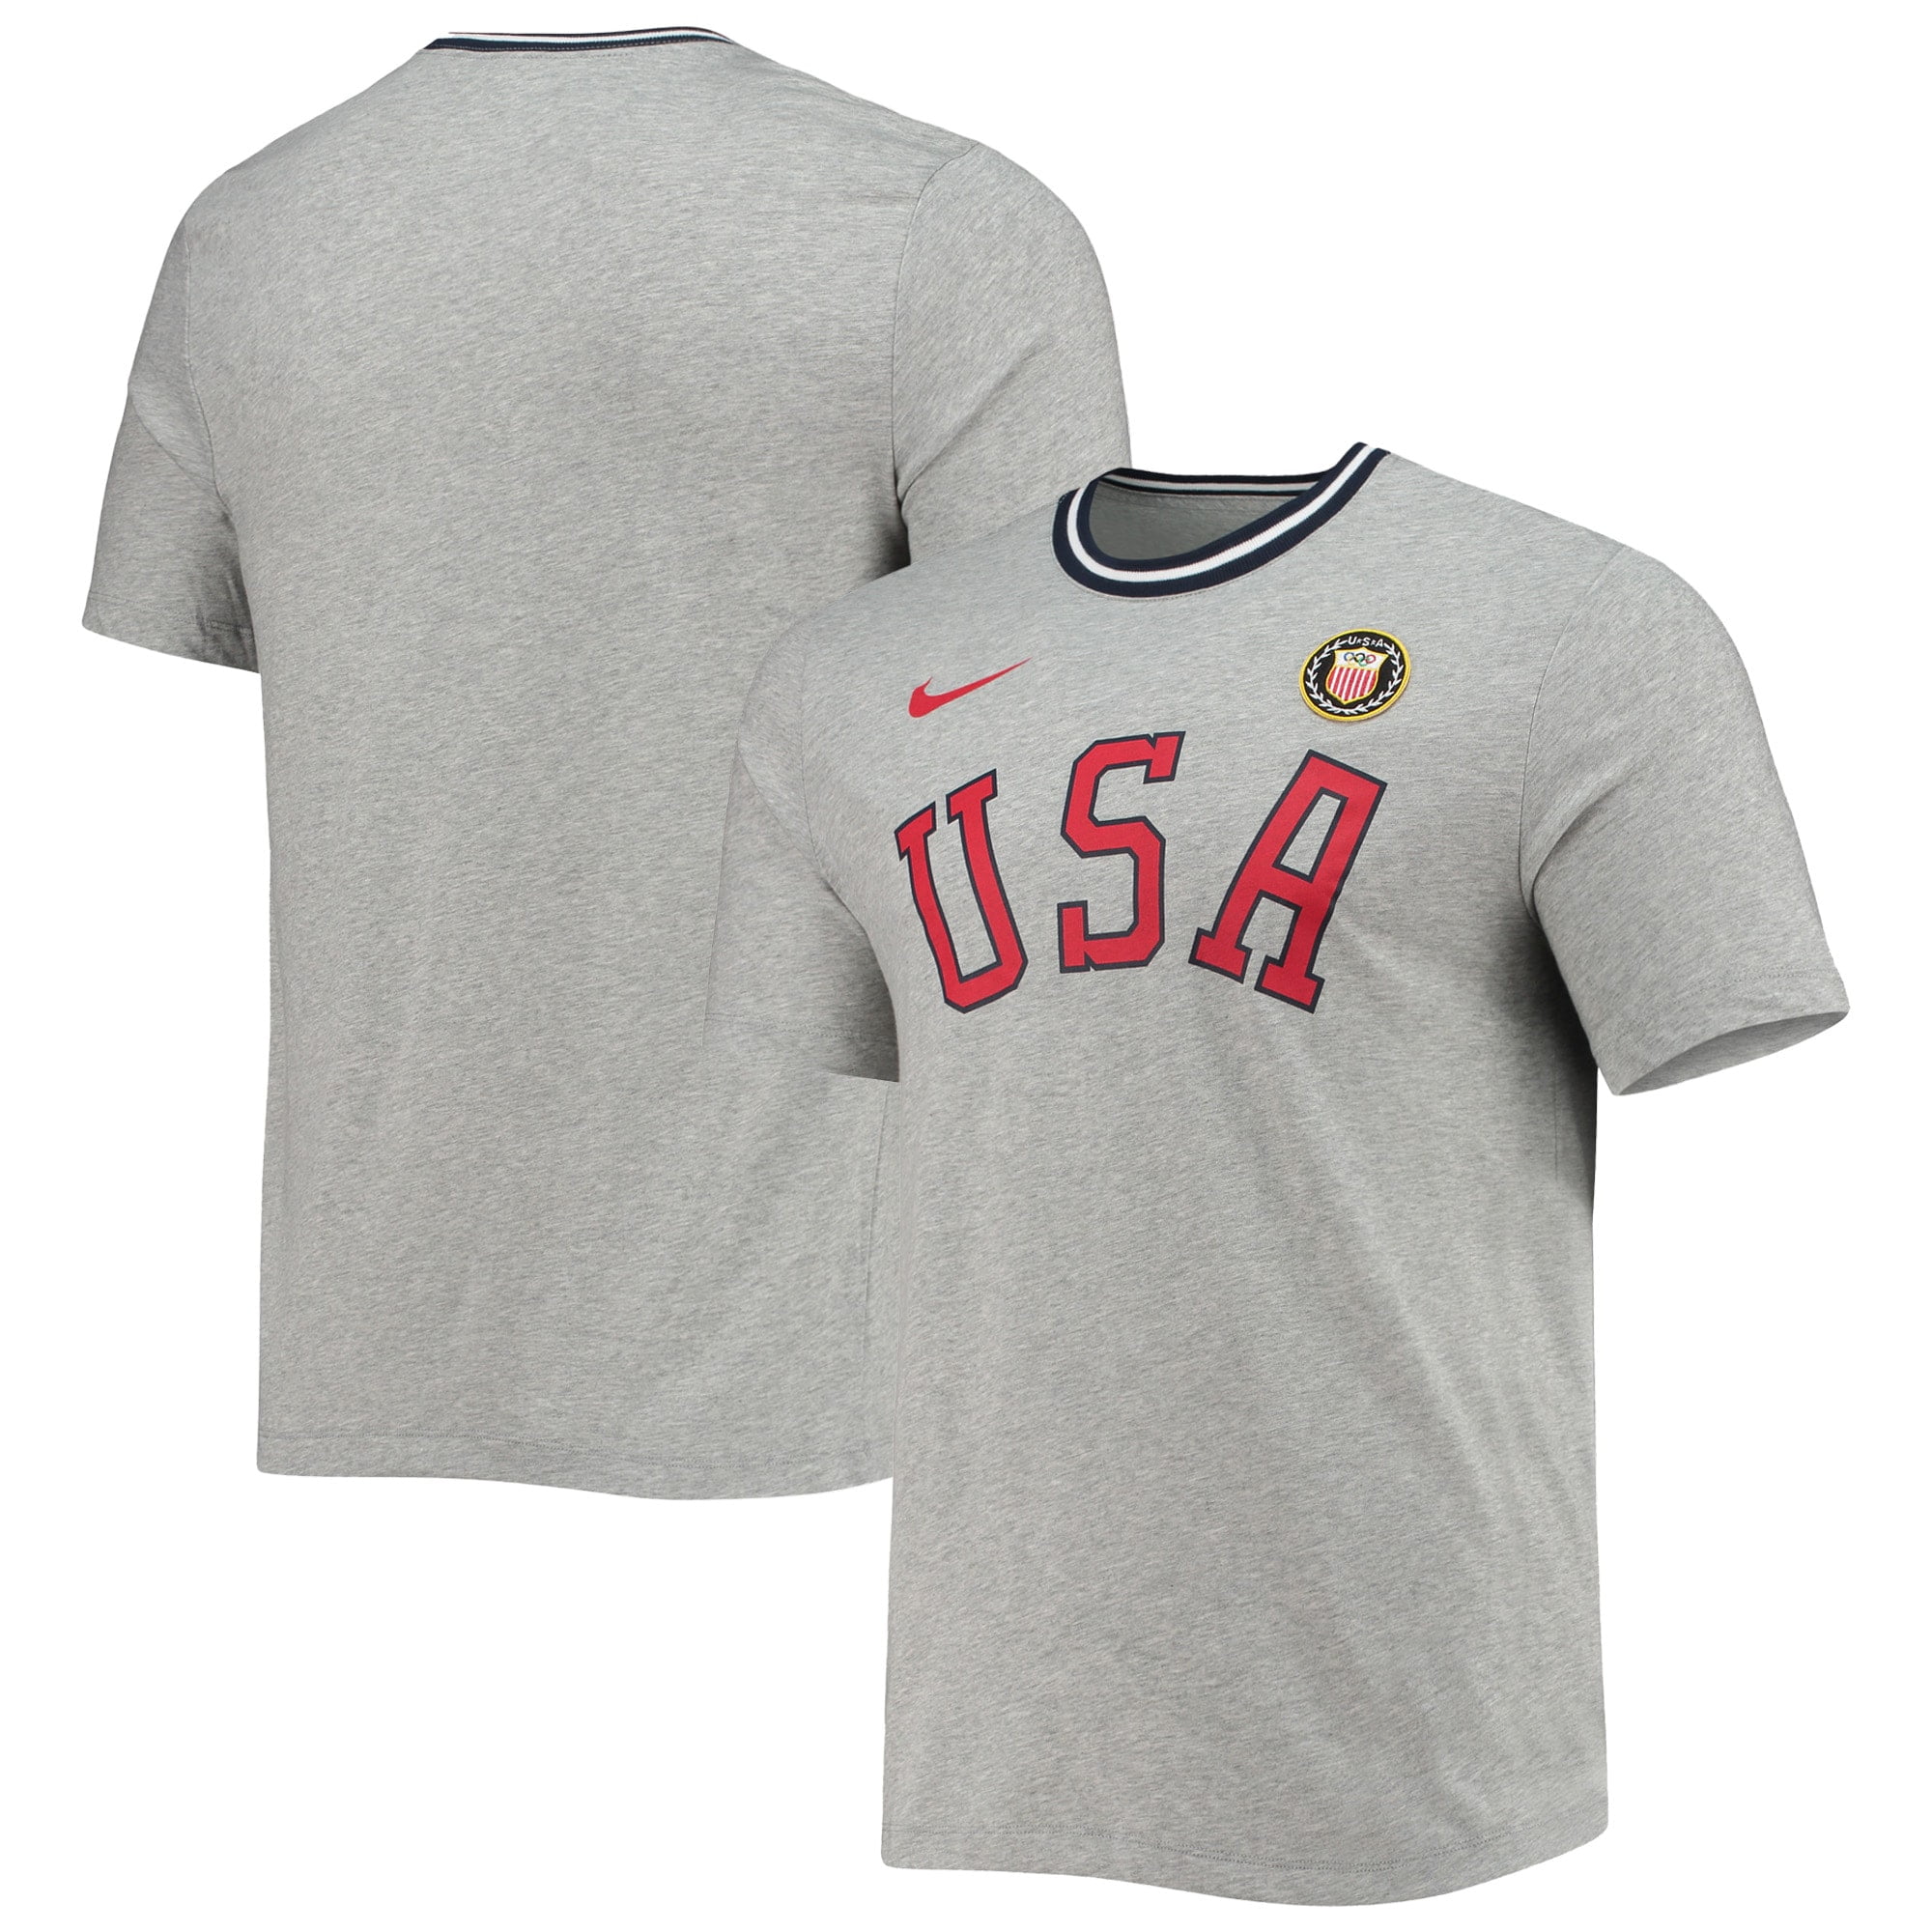 Investigación Limpiamente anfitriona Team USA Nike Olympic Heritage T-Shirt - Gray - Walmart.com